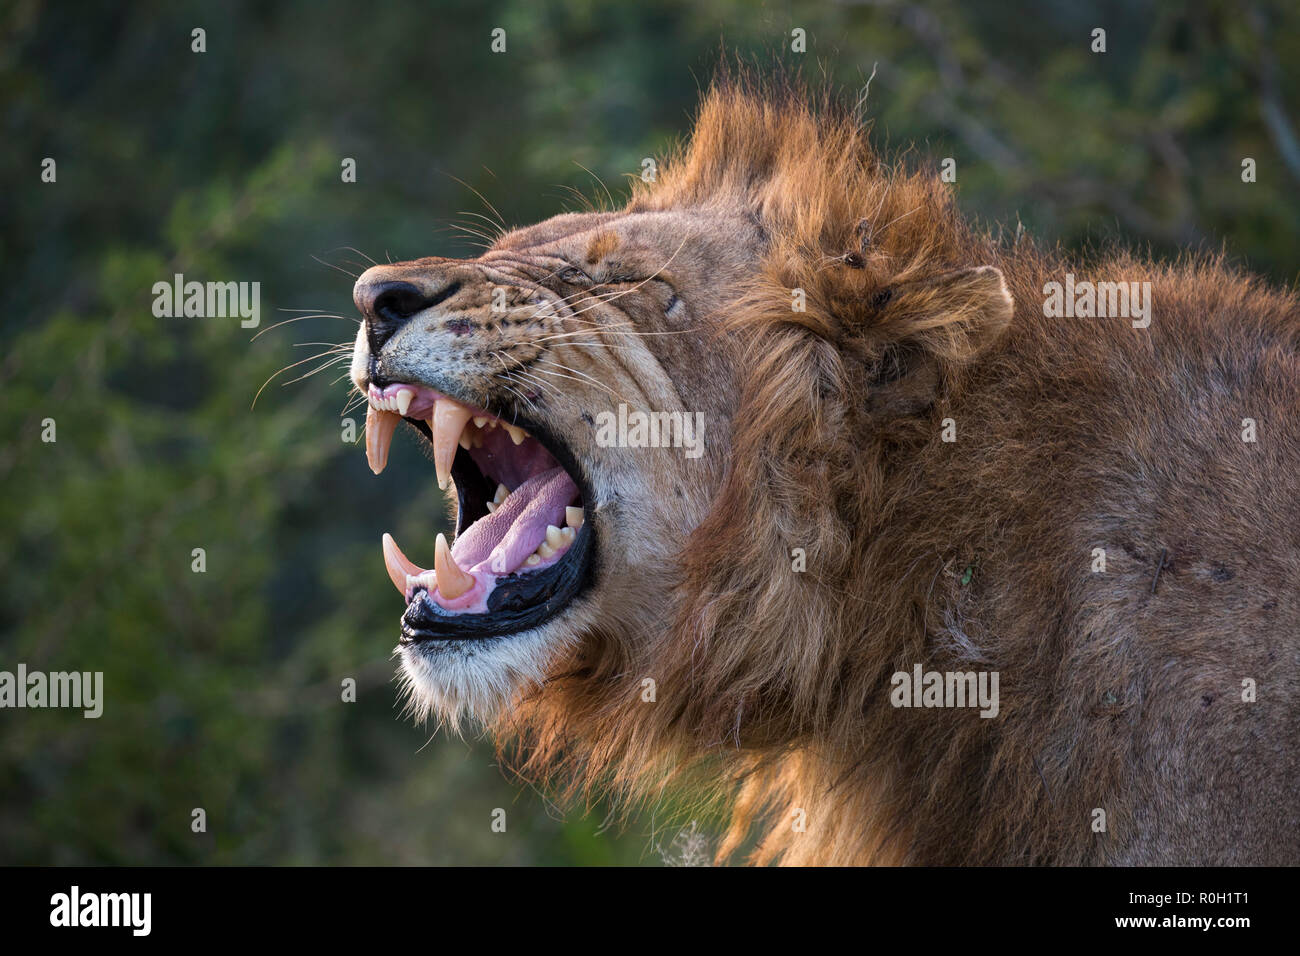 Lion (Panthera leo) montrant flehmen grimace, Zimanga Private Game Reserve, KwaZulu-Natal, Afrique du Sud, Juin 2018 Banque D'Images